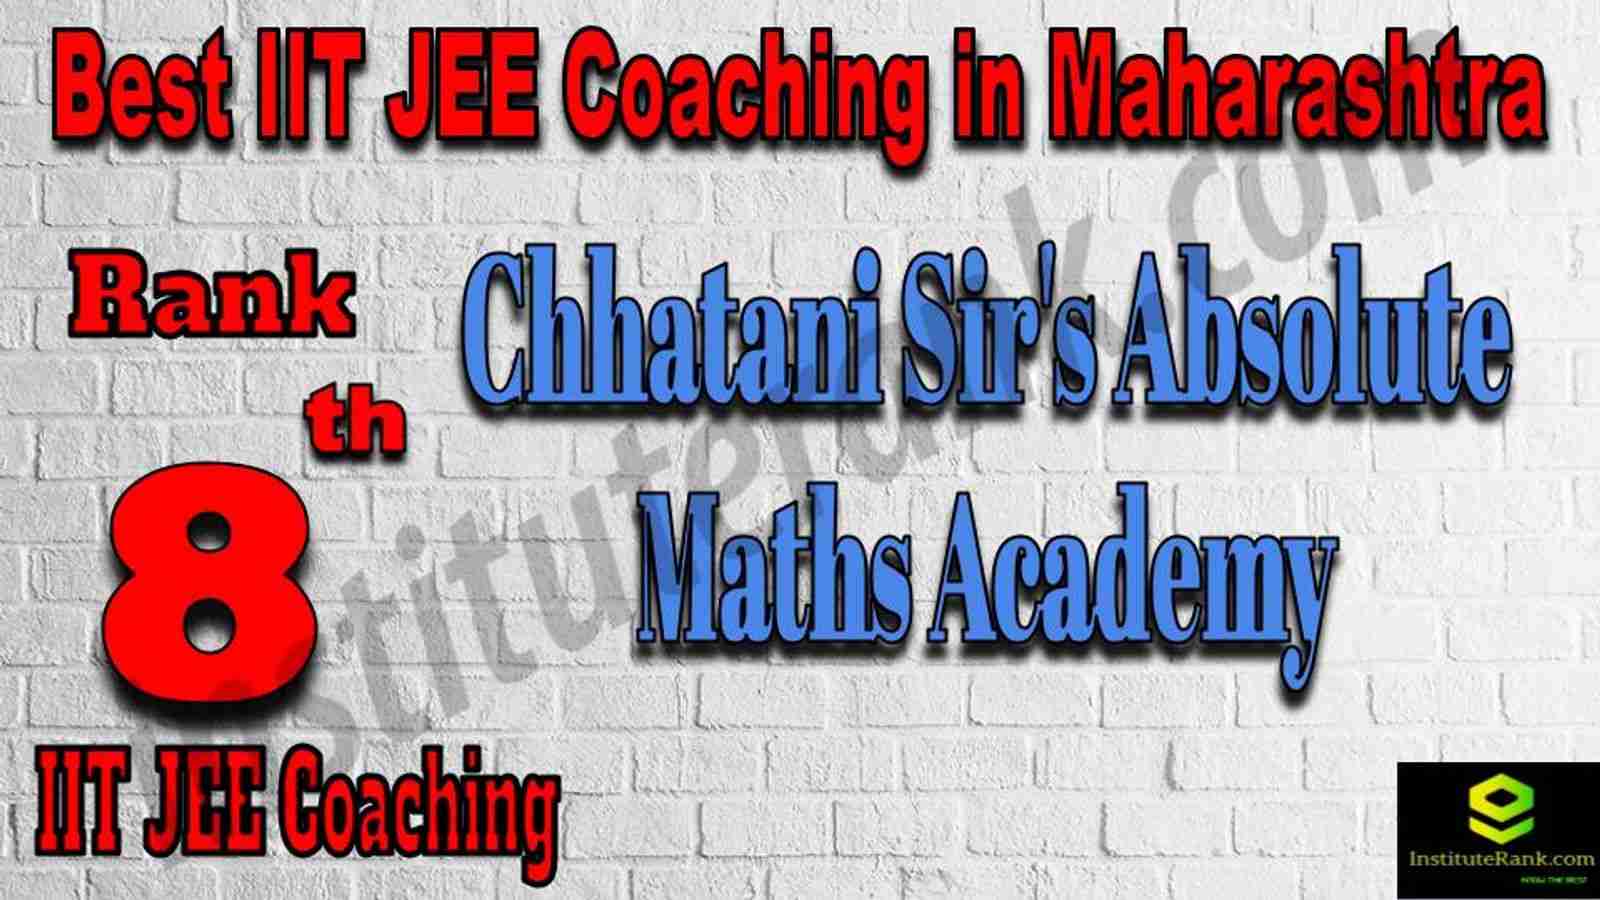 8th Best IIT JEE Coaching in Maharashtra